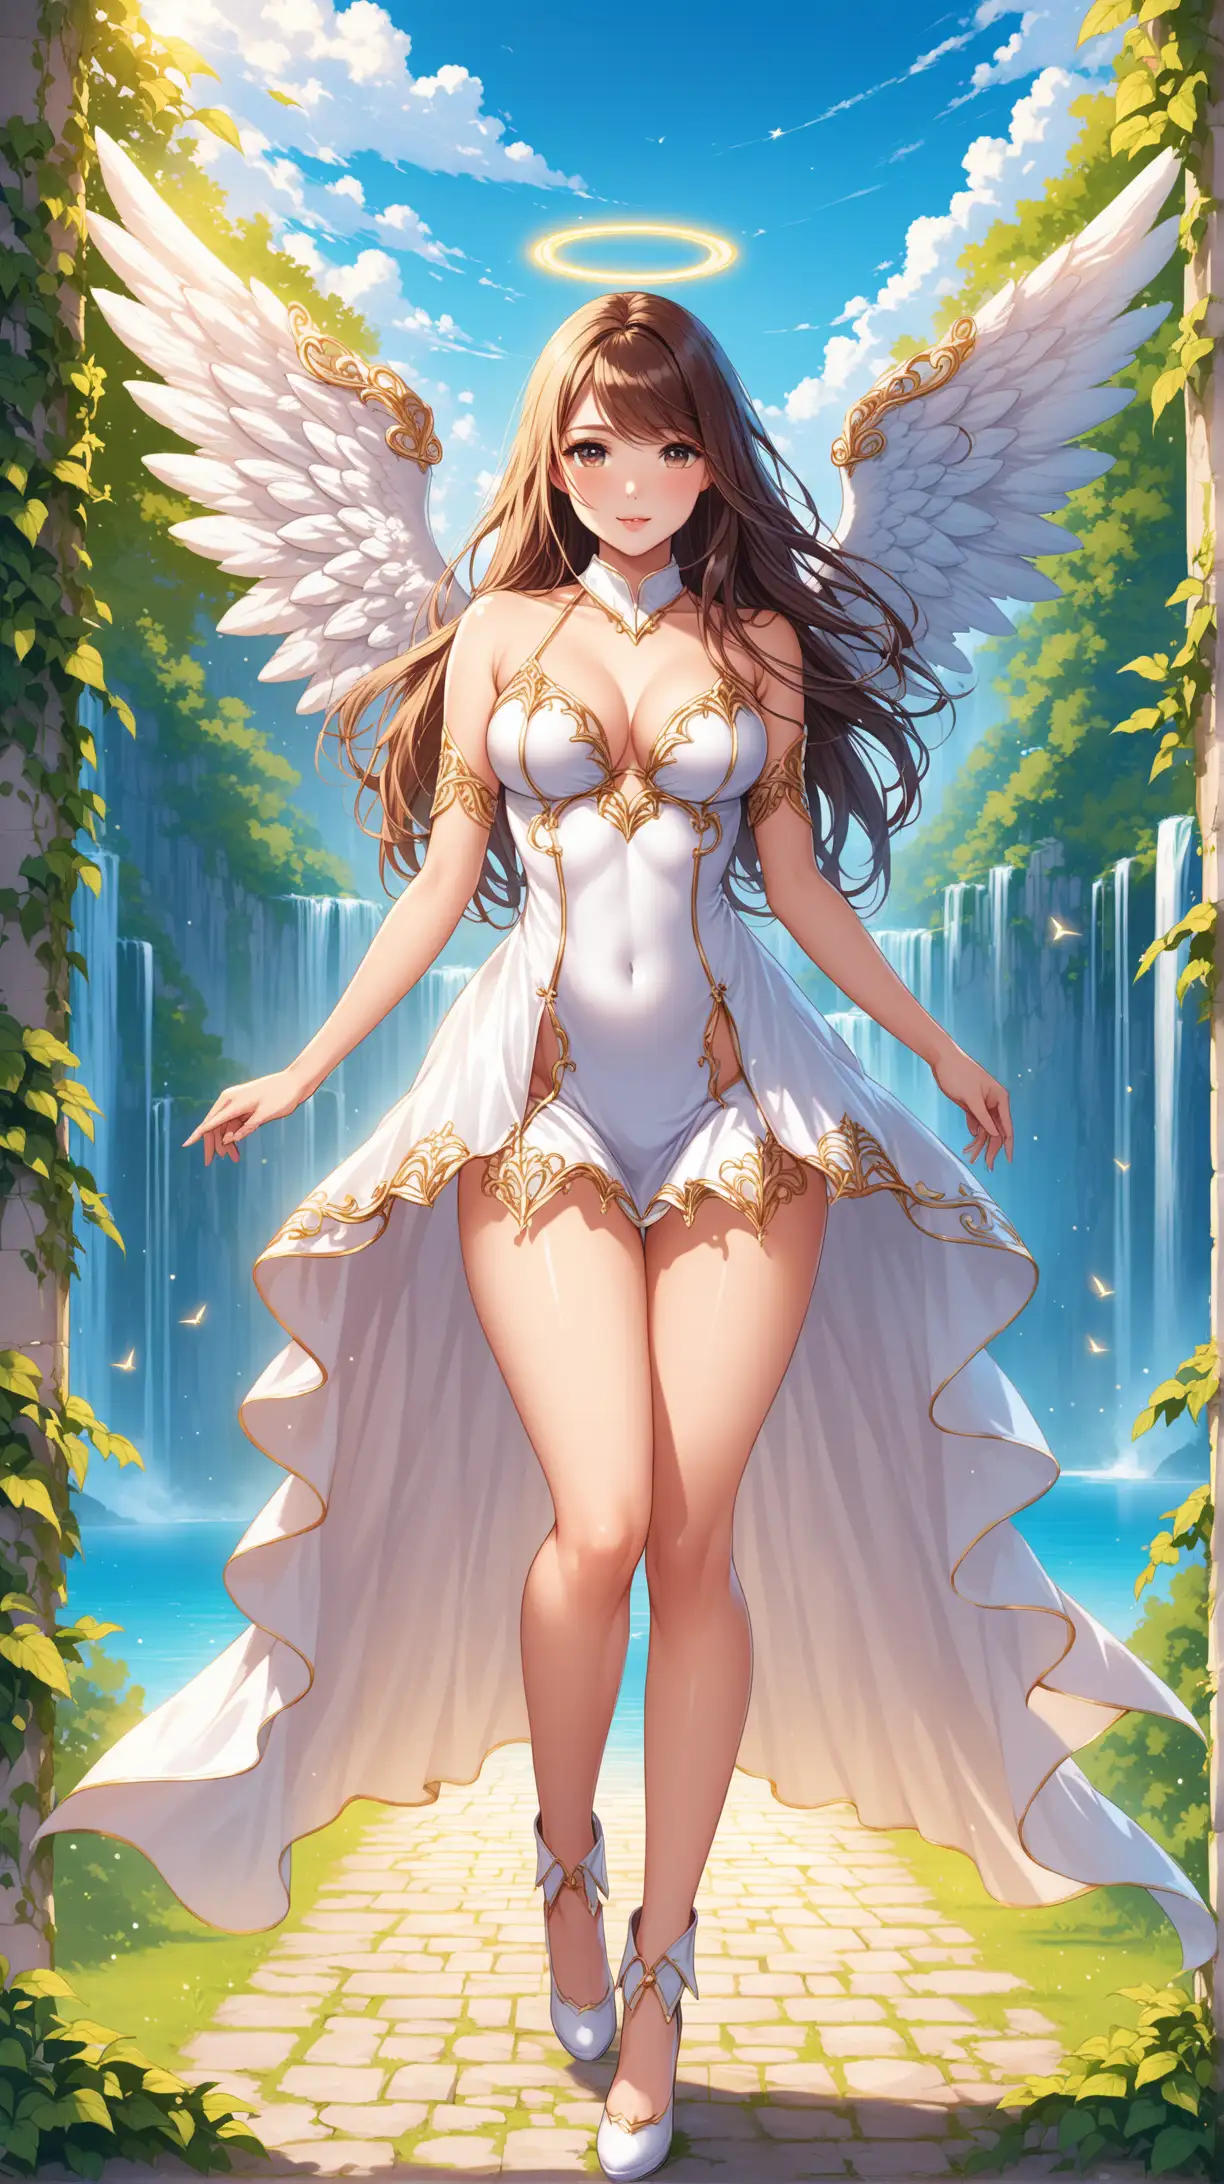 Sexy women, angel costume, long hair, short dress, fantastic background 